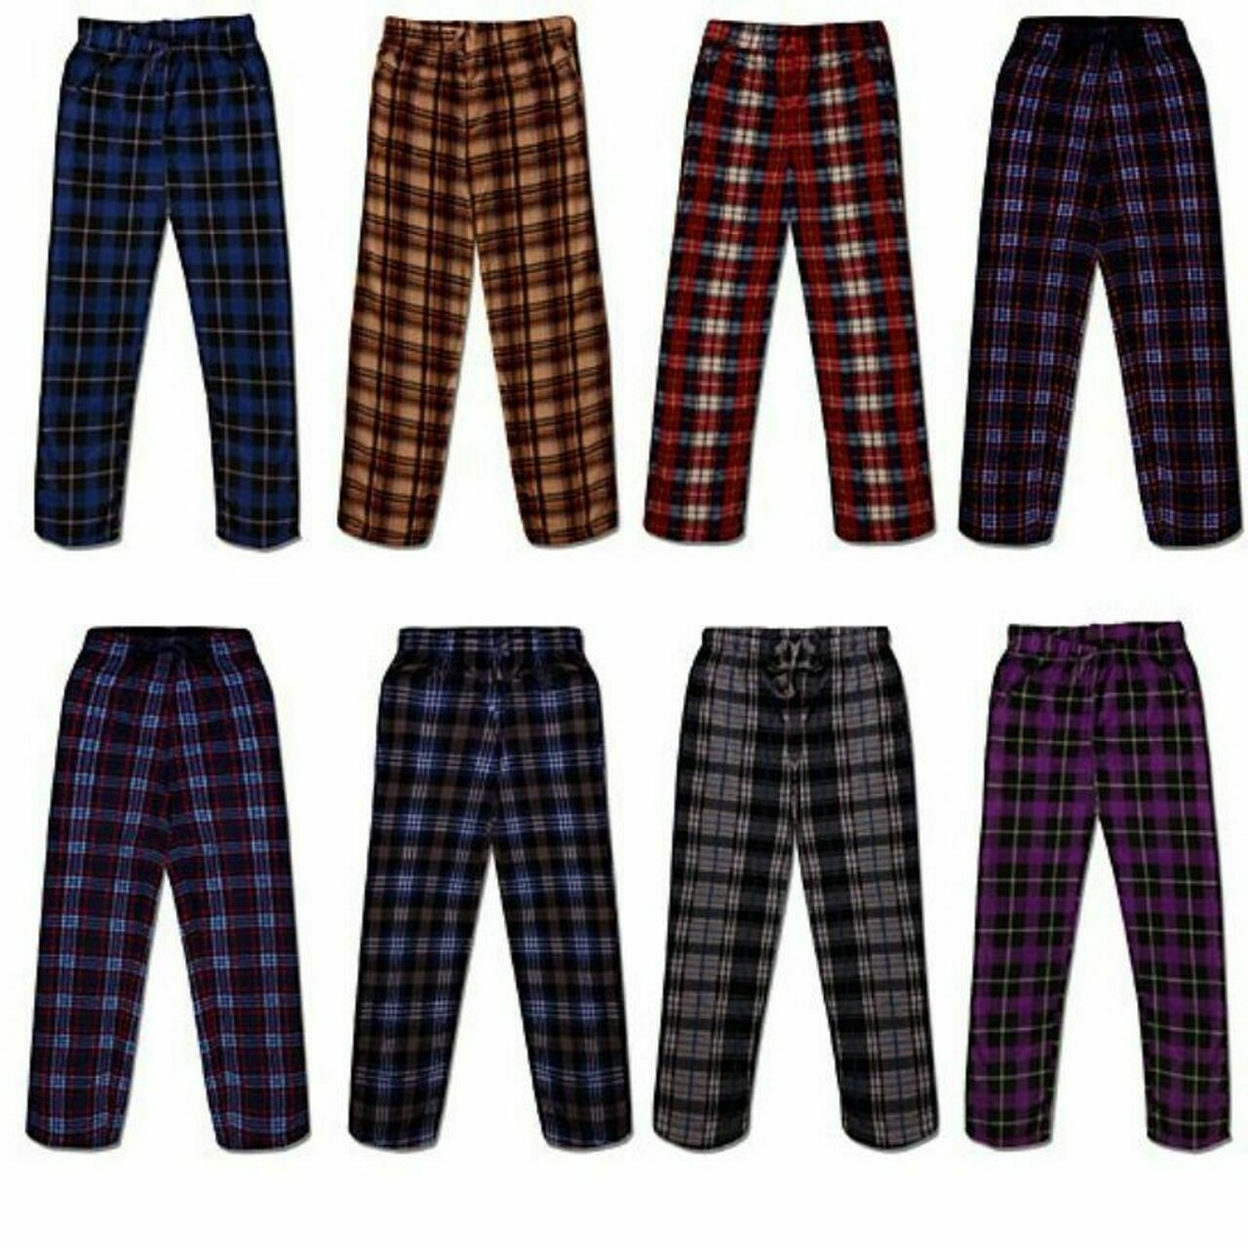 2-Pack: Men's Ultra Soft Cozy Flannel Fleece Plaid Pajama Sleep Bottom Lounge Pants - Black & Black, Medium